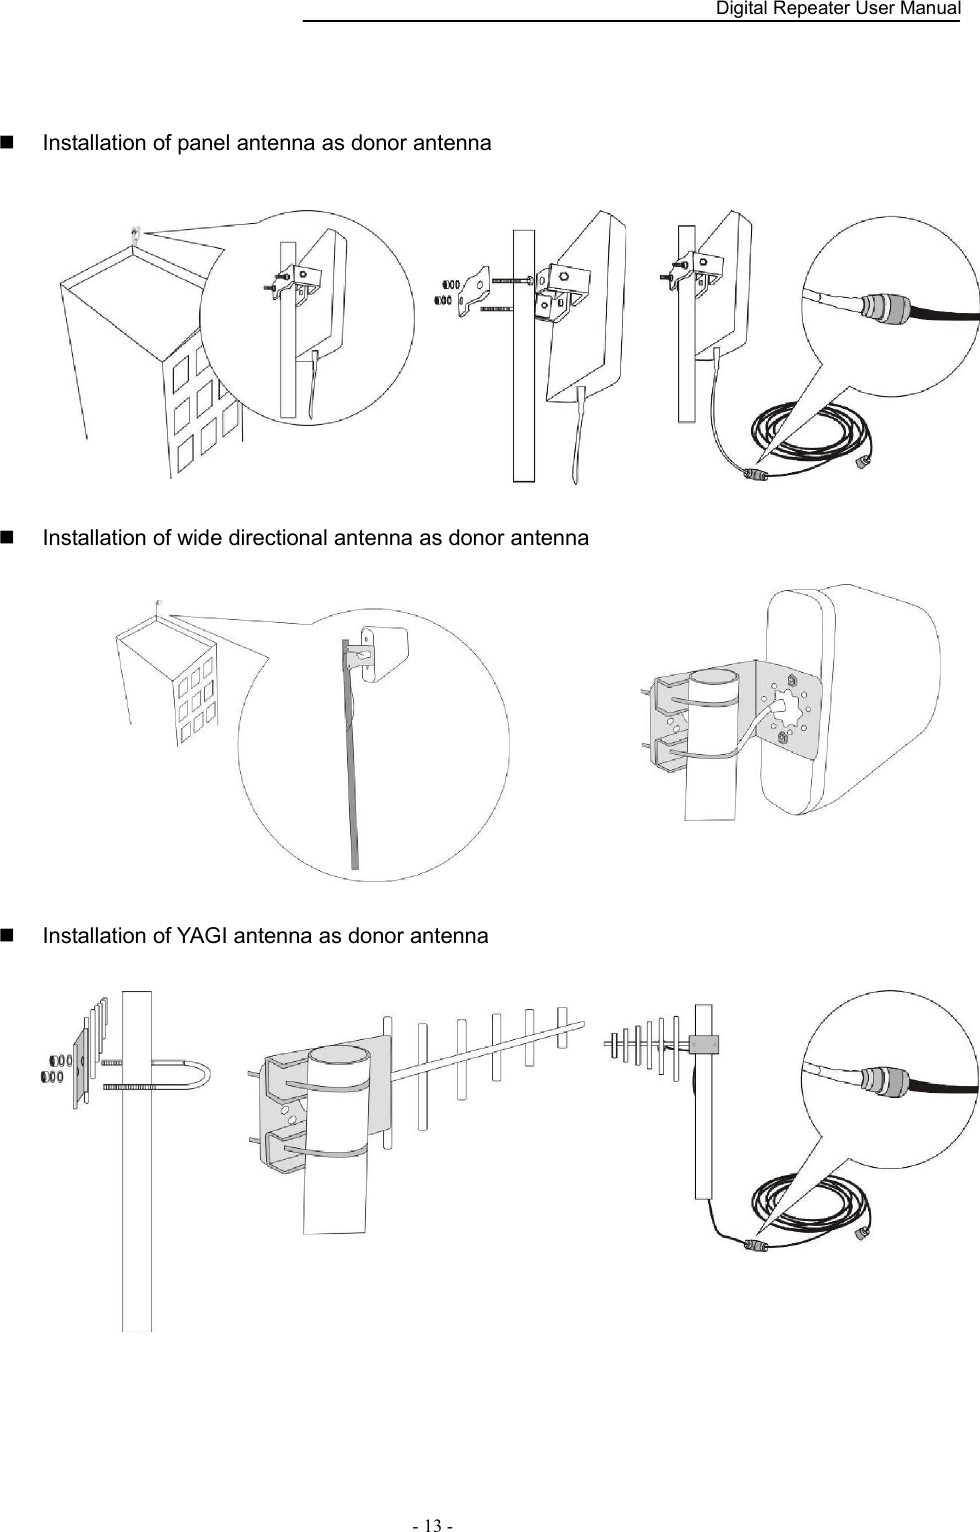    Digital Repeater User Manual  - 13 -       Installation of panel antenna as donor antenna                Installation of wide directional antenna as donor antenna              Installation of YAGI antenna as donor antenna             